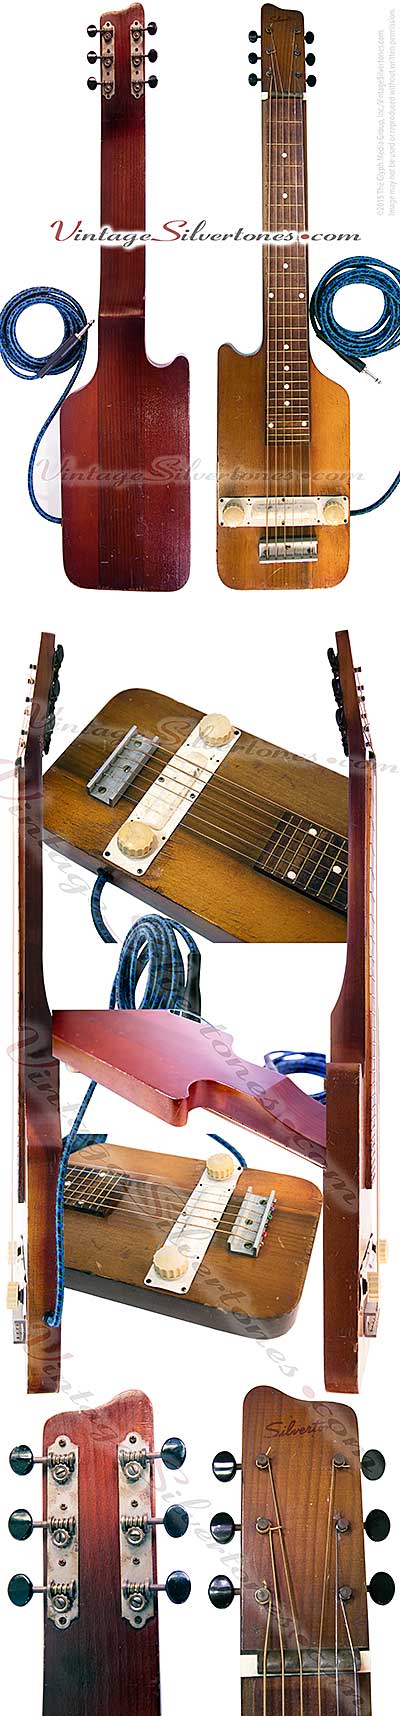 Silvertone lap steel - danelectro - 1 pickup, natural cherry finish hardwood solid body electric lap steel guitar made in Neptune, NJ USA 1953